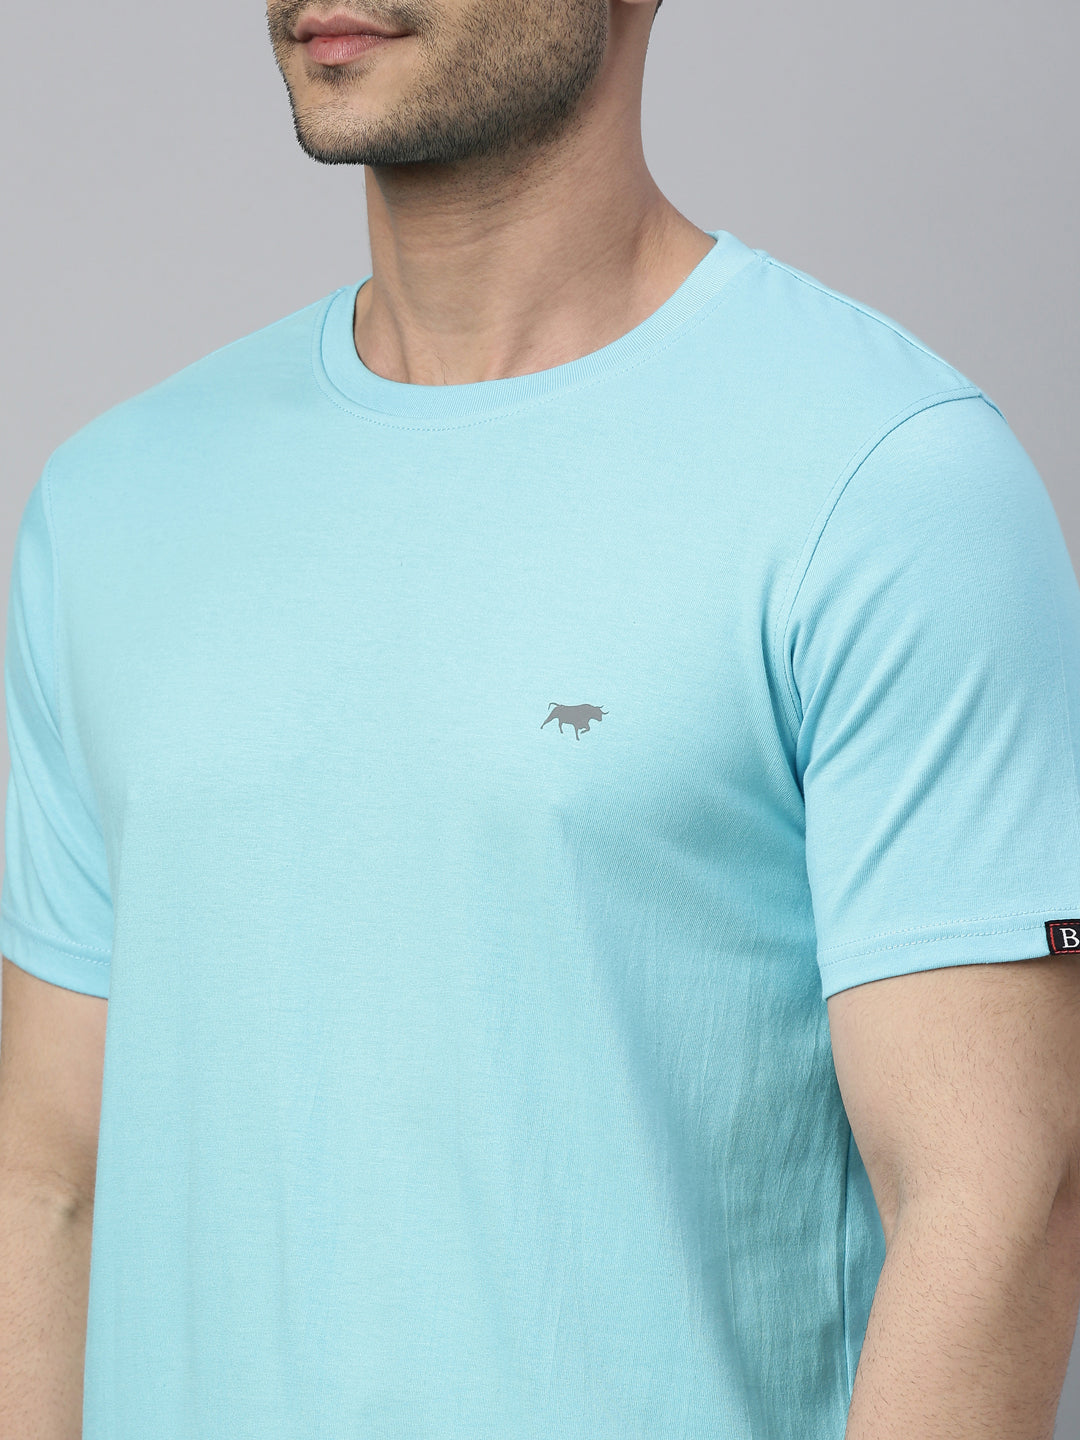 Cadded Blue Solid Half Sleeves T-Shirt Plain T-Shirts Bushirt   